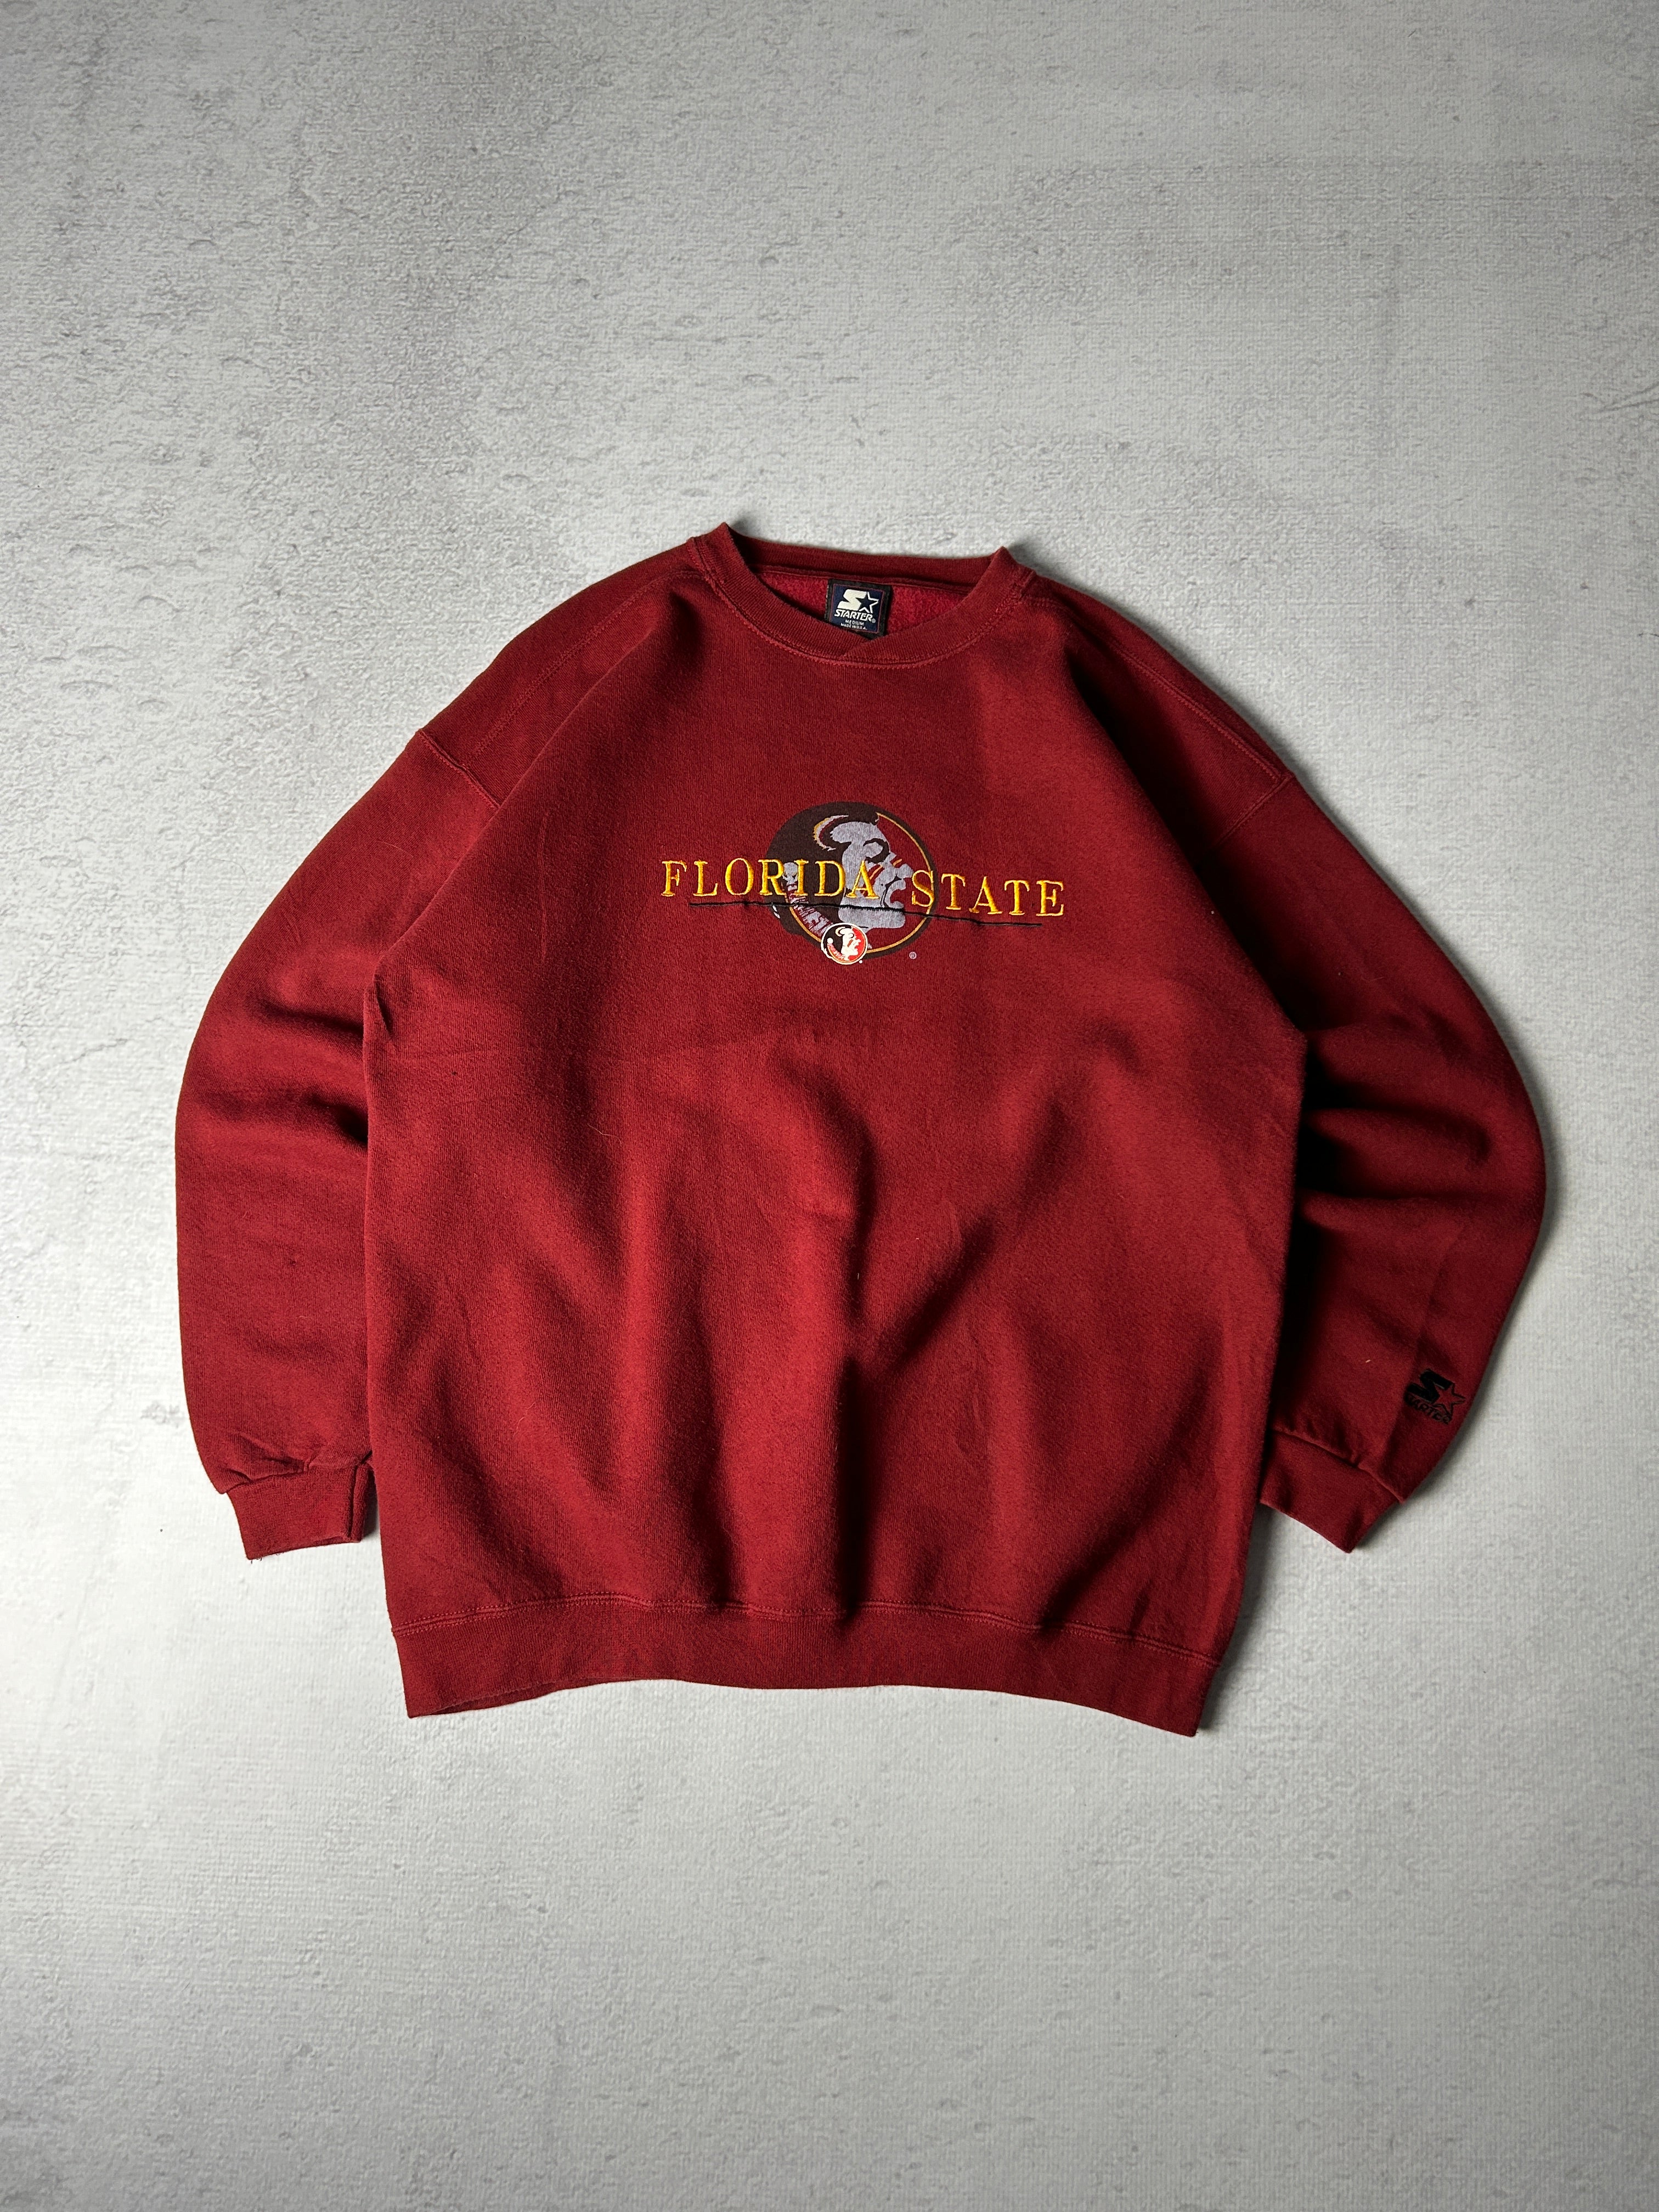 Vintage NCAA Florida State University Crewneck Sweatshirt - Men's Medium